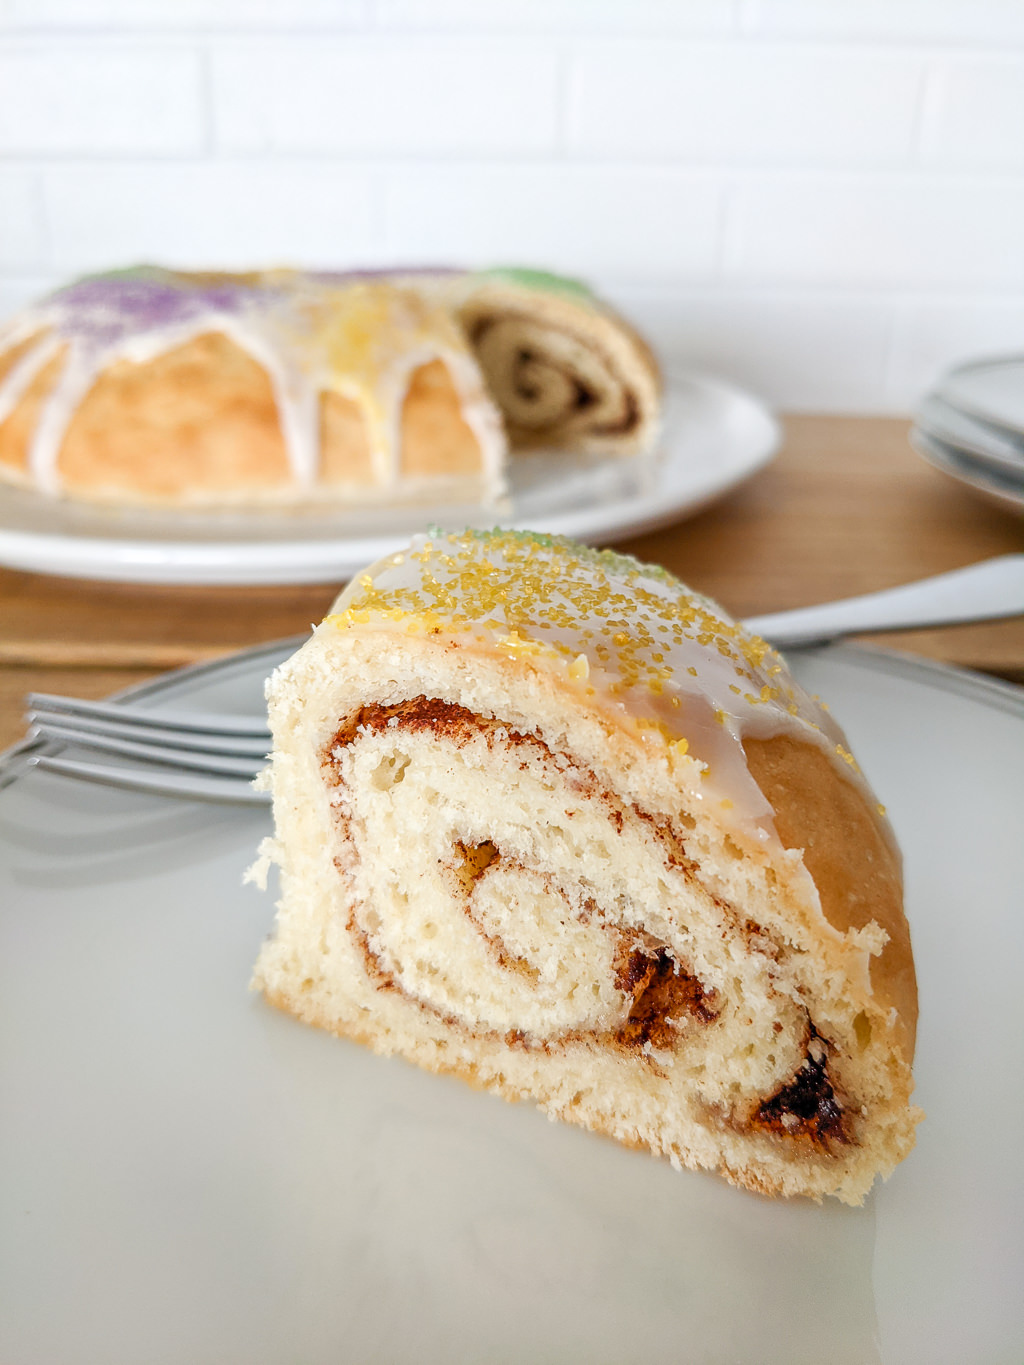 King Cake slice that shows the cinnamon roll swirl